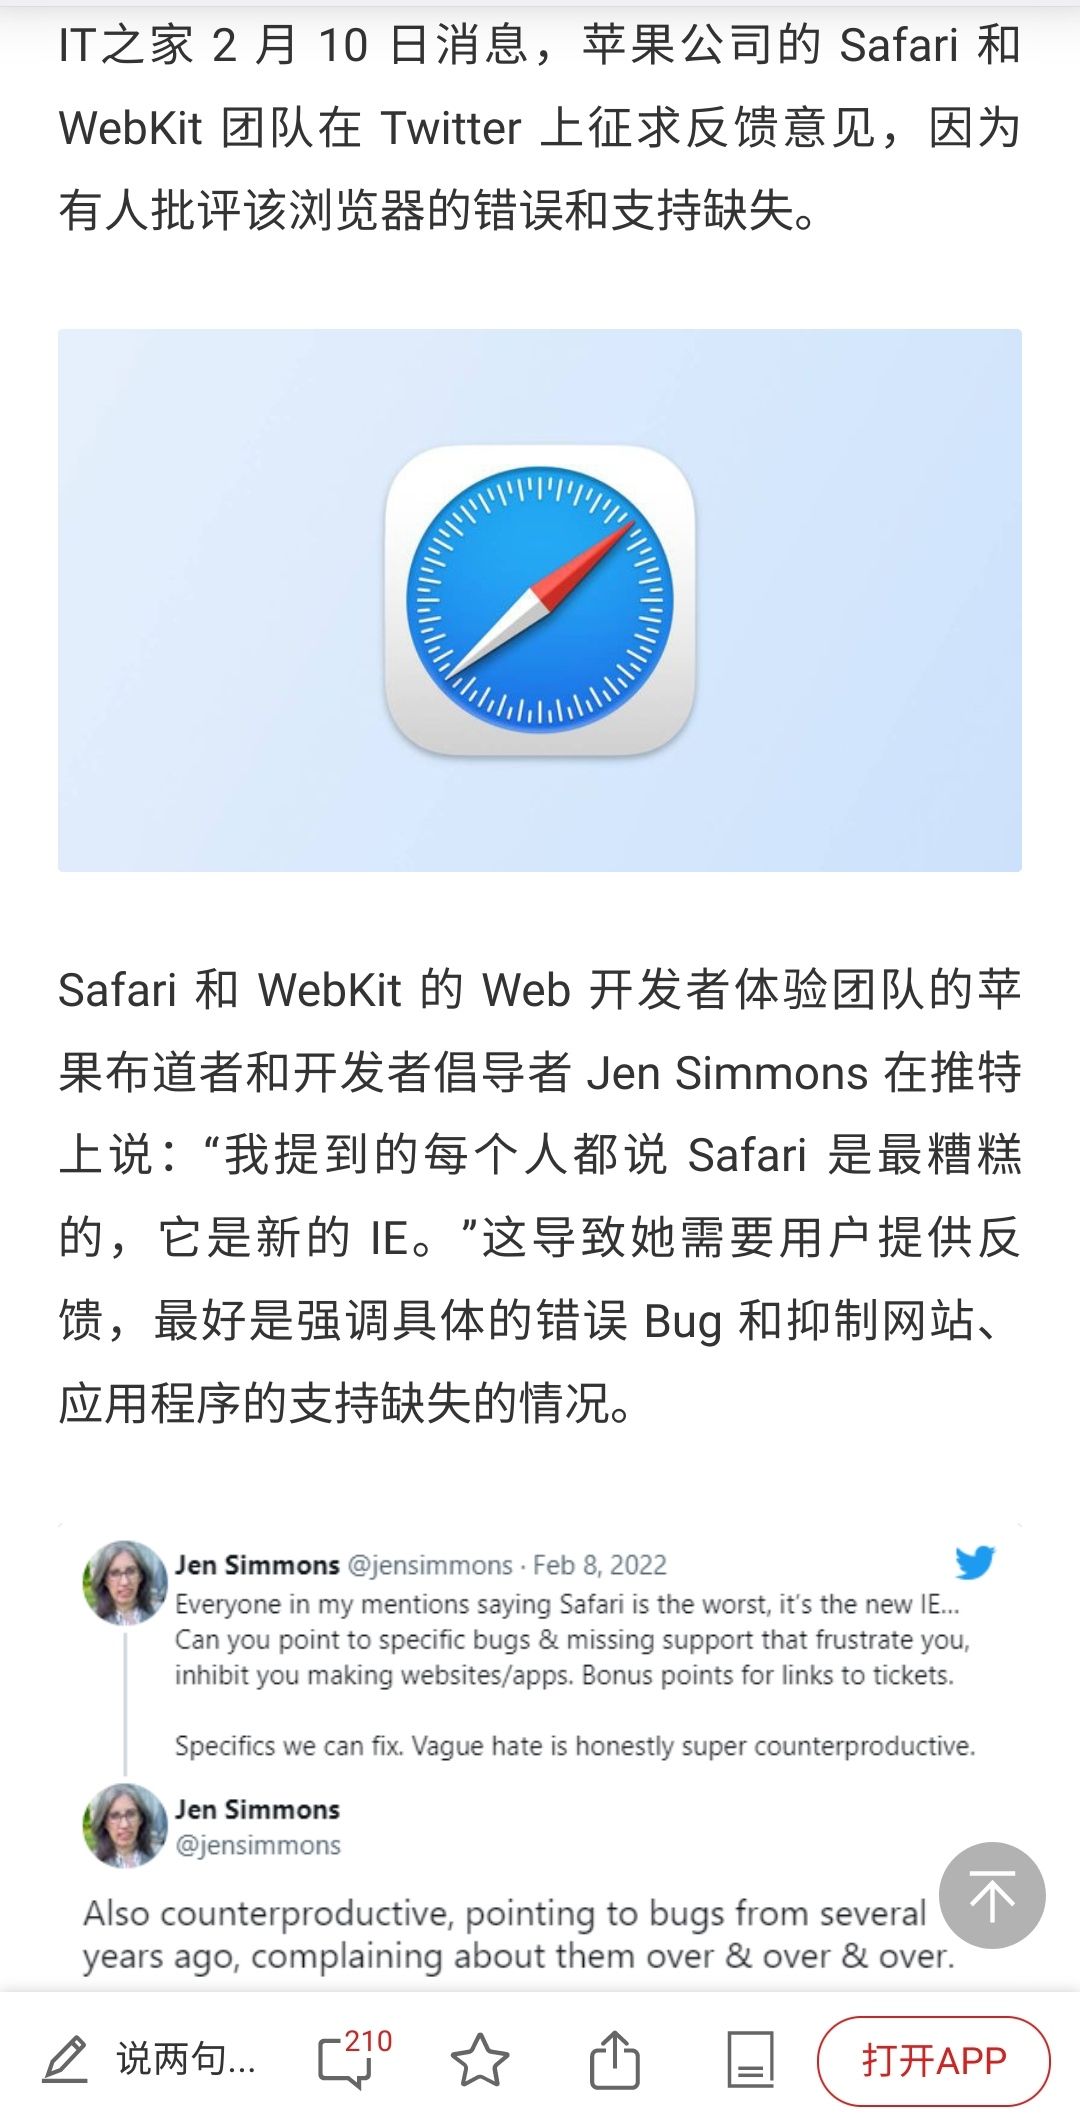 Safari浏览器被指责体验糟糕就像 IE，苹果团队征求反馈意见 safari,浏览,浏览器,指责,体验